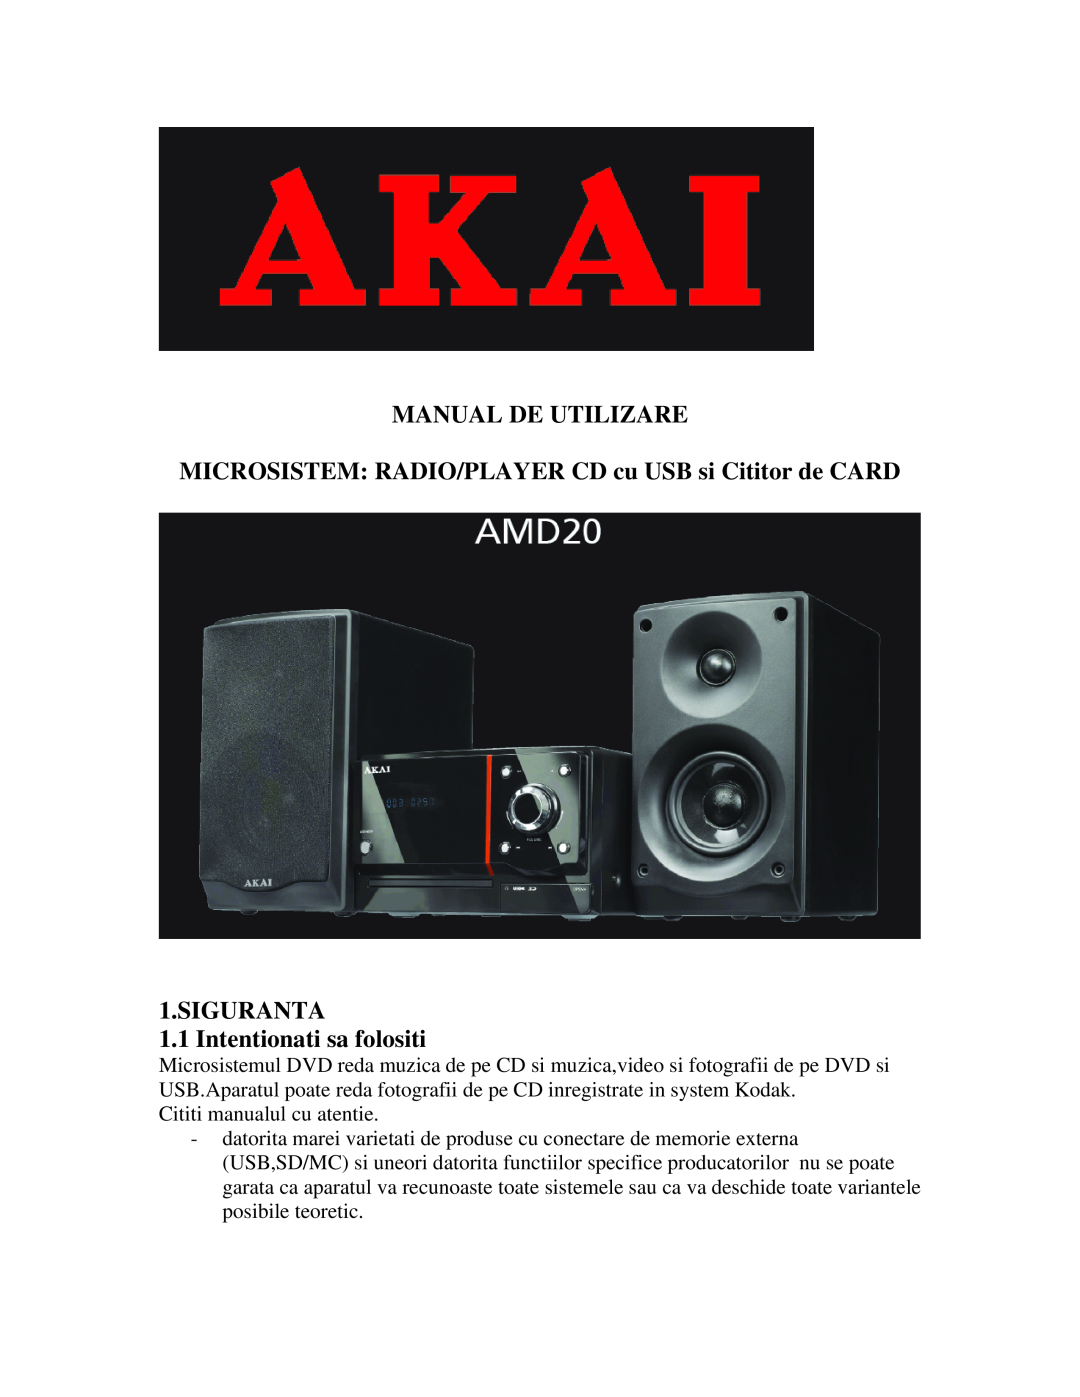 Akai AMD20 manual Manual De Utilizare, SIGURANTA 1.1 Intentionati sa folositi 